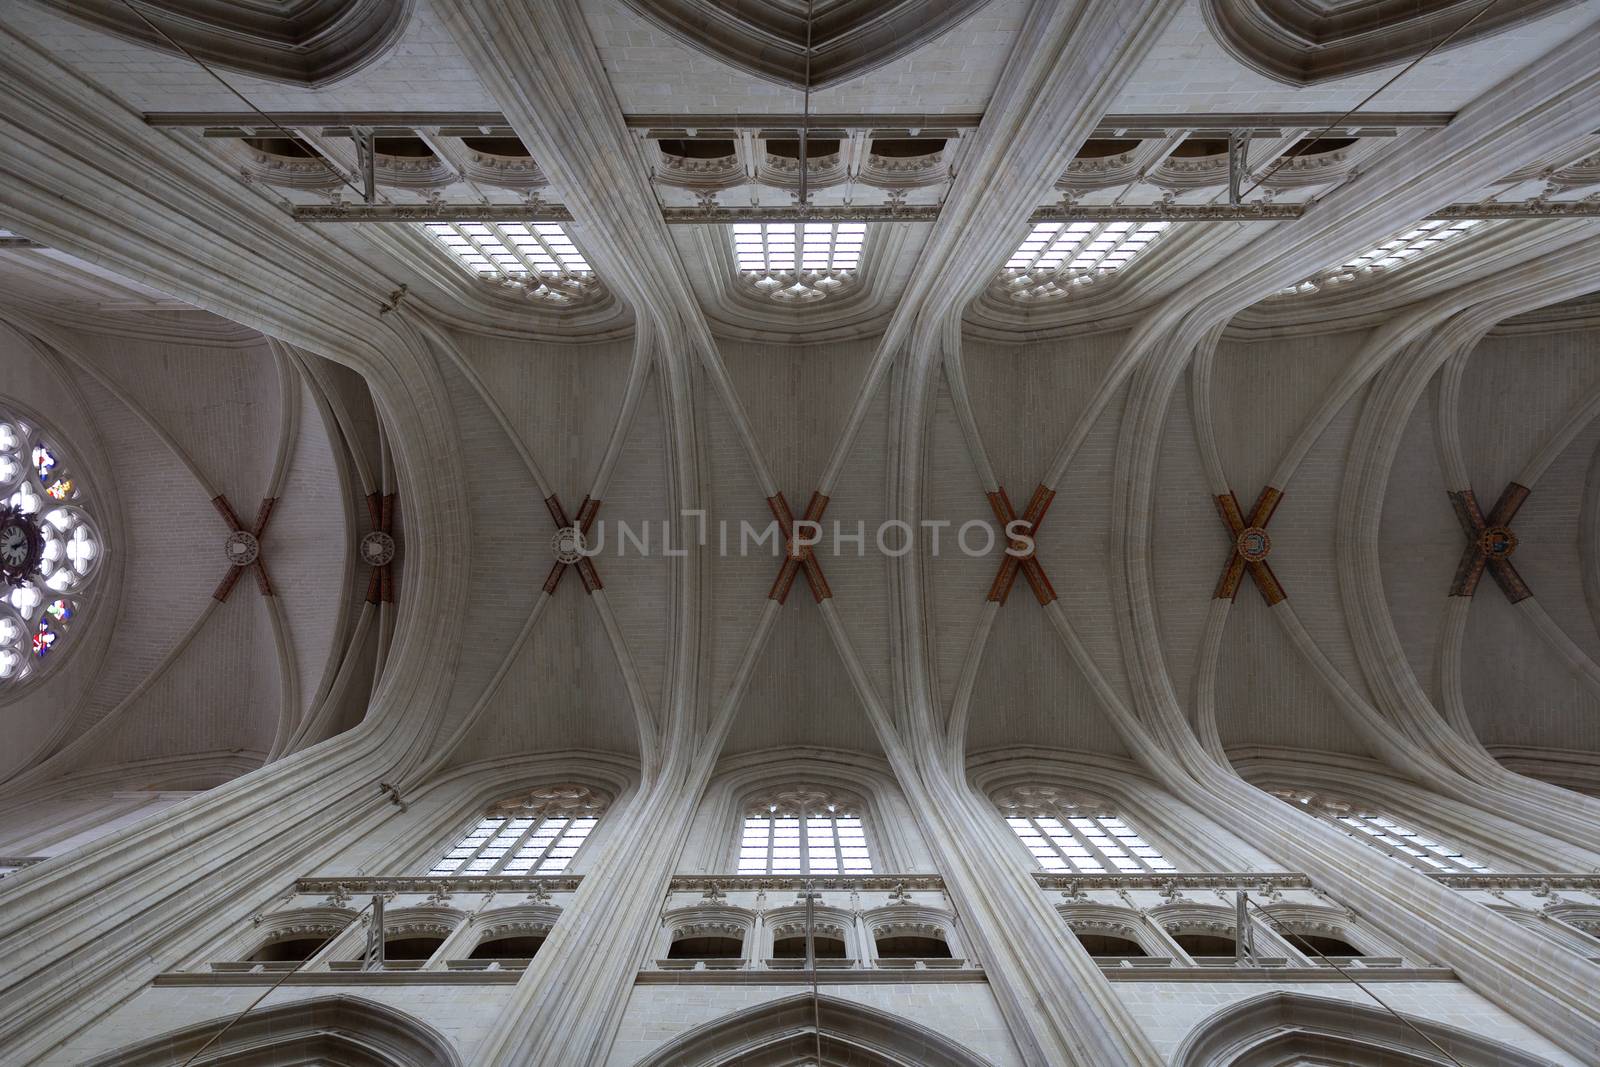 Nantes, France: 22 February 2020: Ceiling of Nantes Cathedral, Cathedral of St. Peter and St. Paul of Nantes